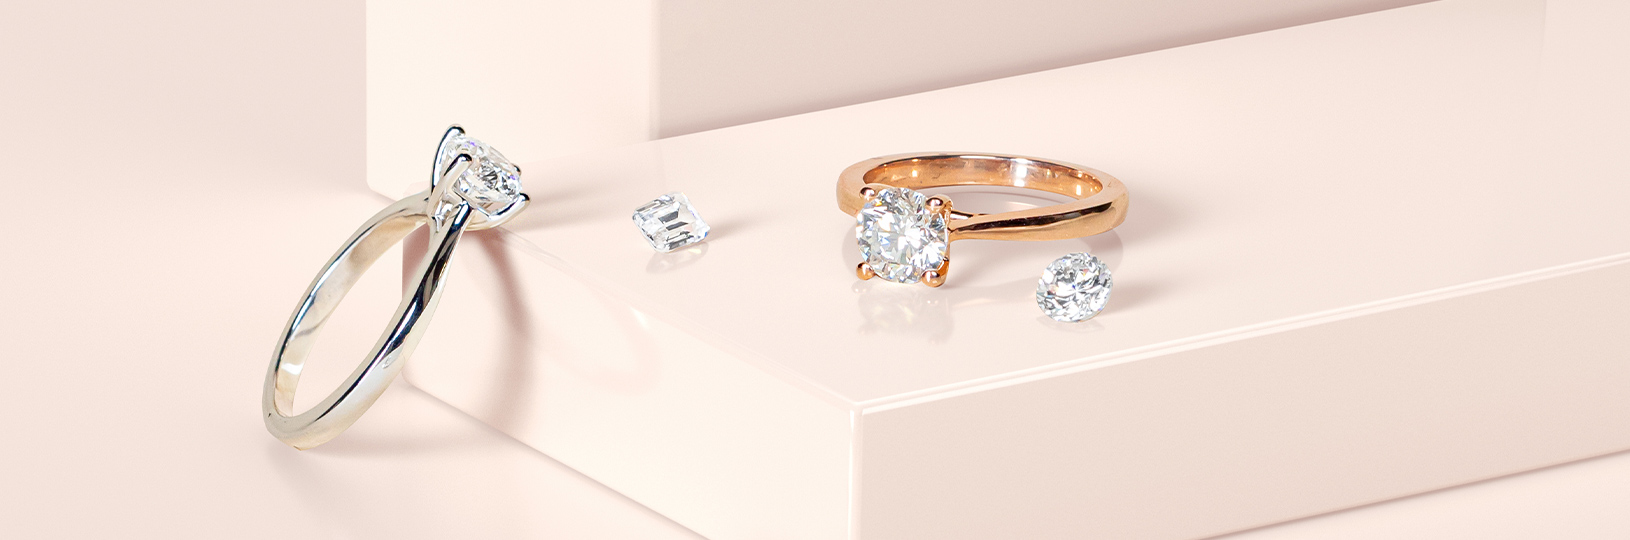 Two lab diamond engagement rings